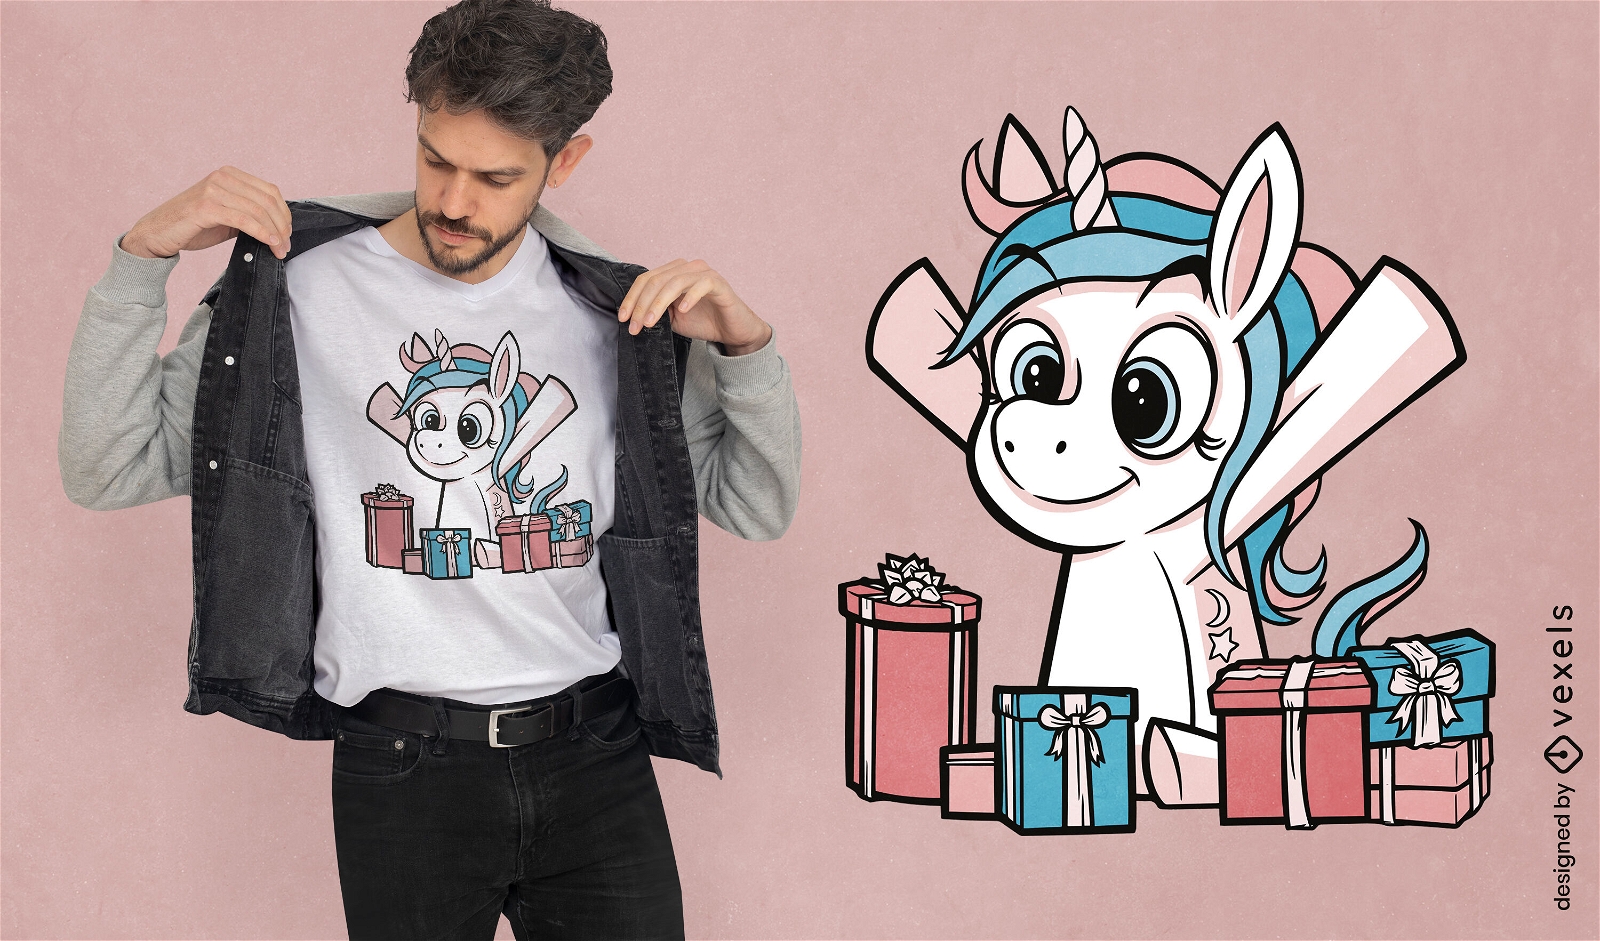 Unicornio de dibujos animados con dise?o de camiseta de regalos.